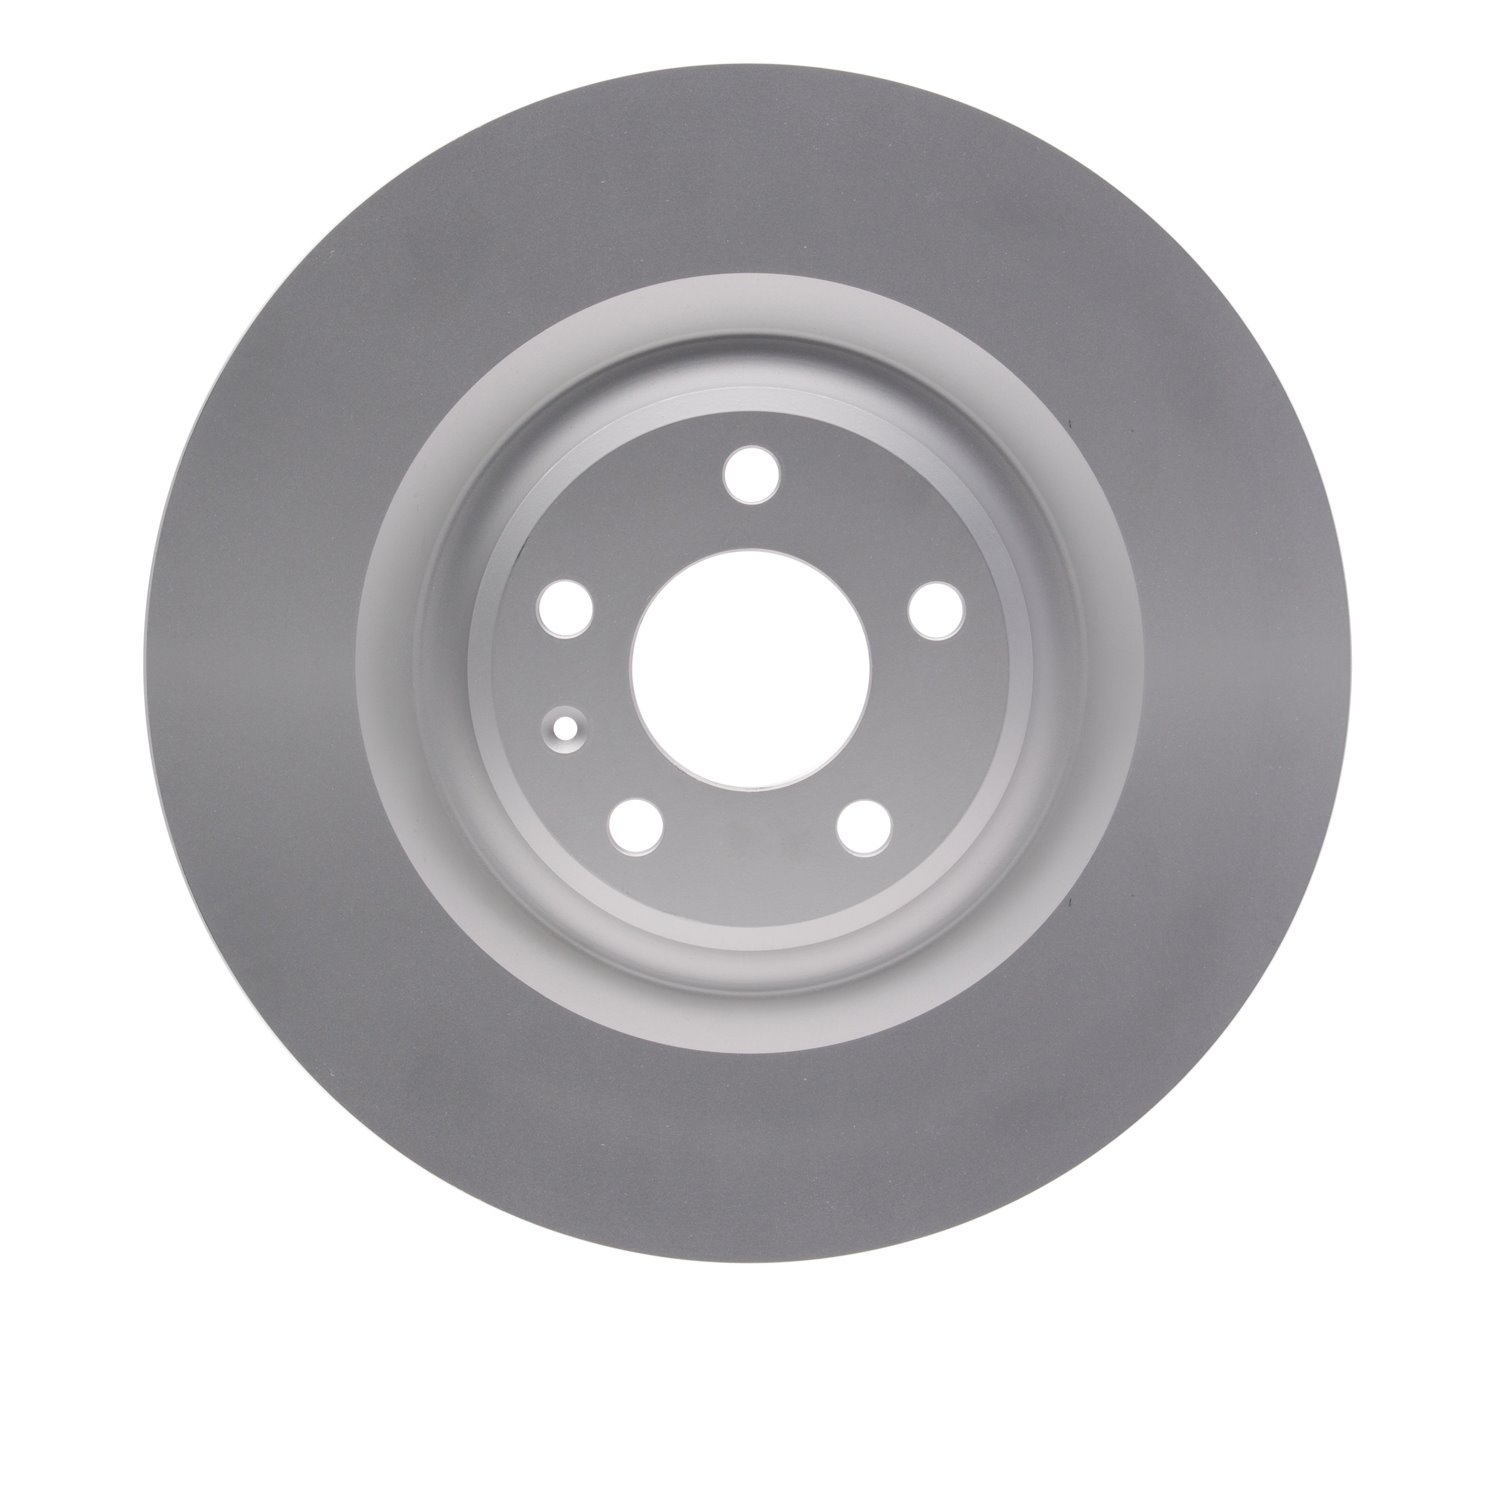 GEOMET Hi-Carbon Alloy Brake Rotor [Coated], Fits Select